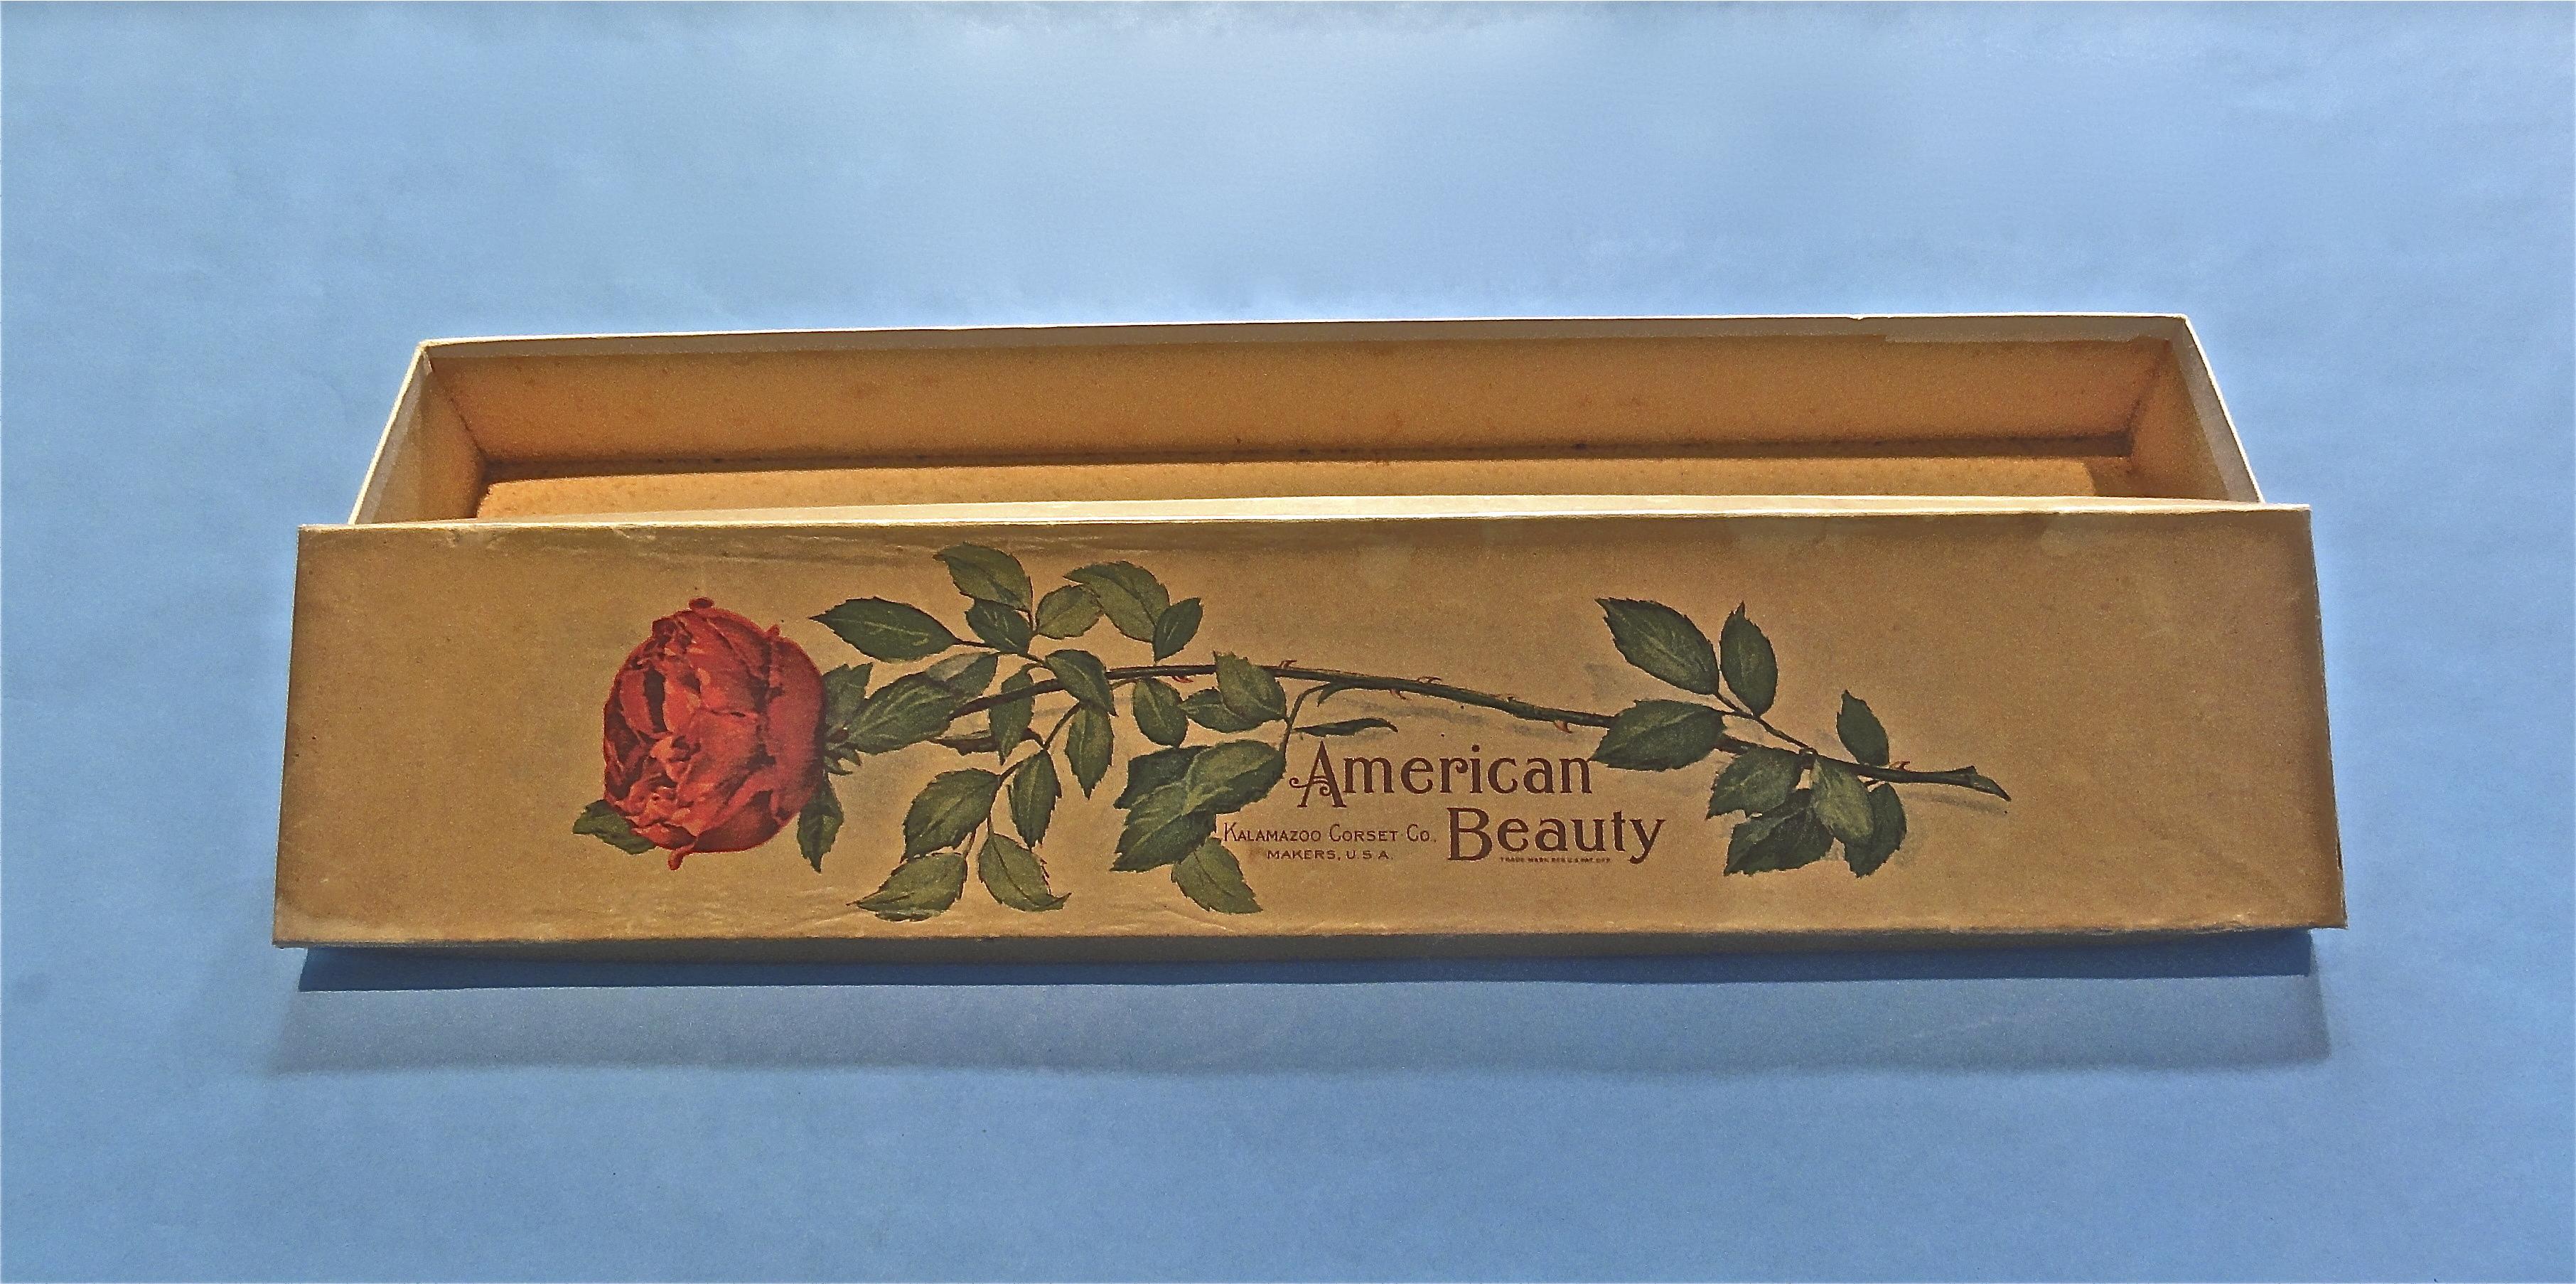 American Beauty corset box - UWDC - UW-Madison Libraries